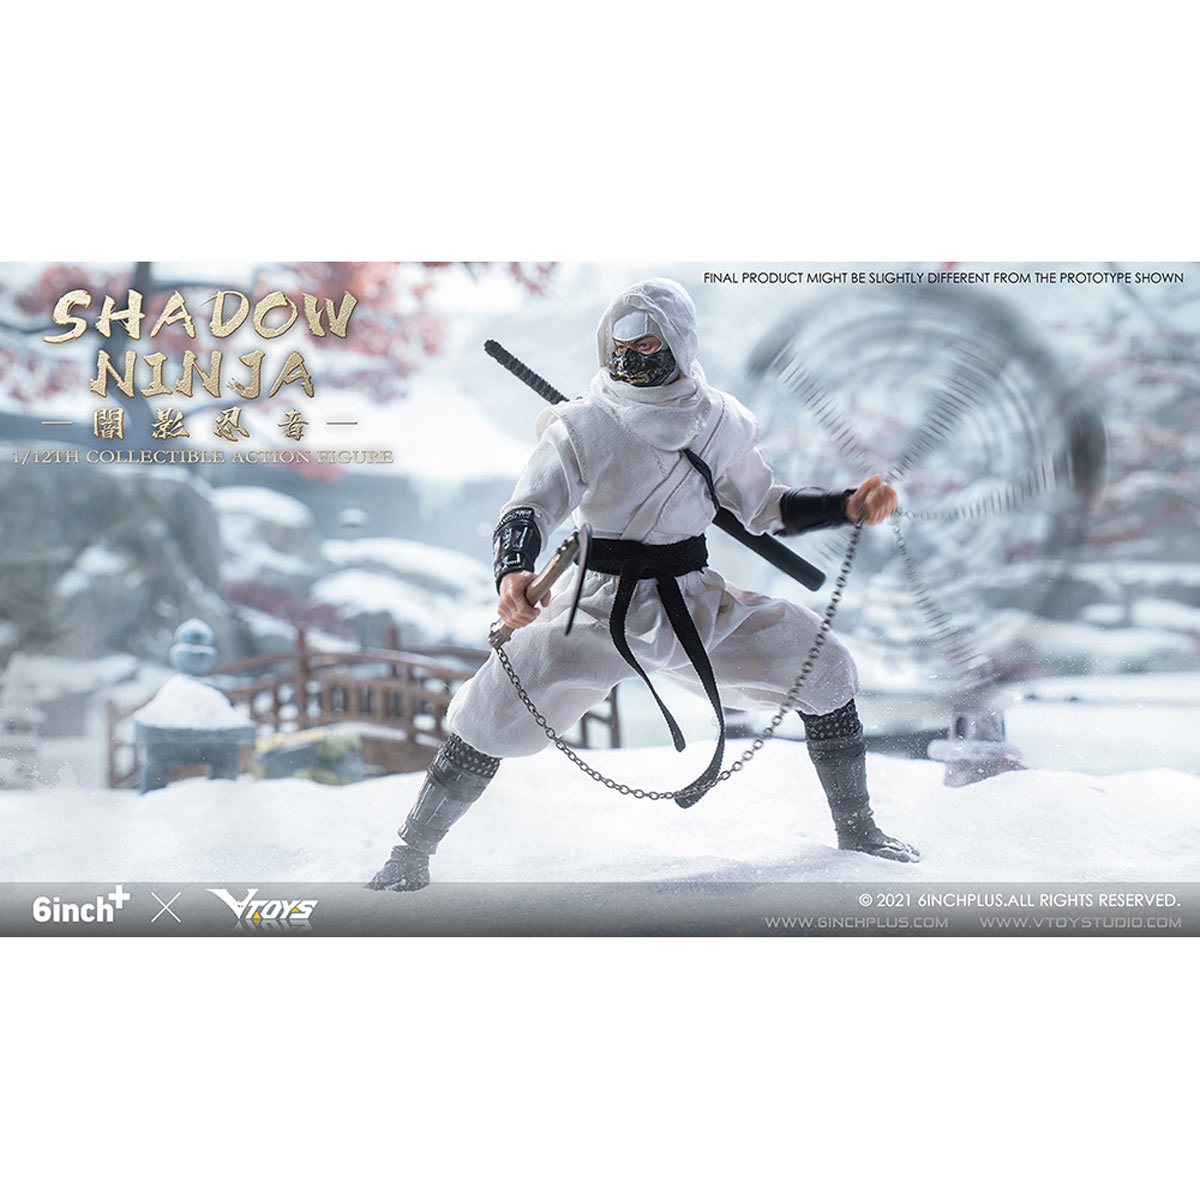 VTOYS X 6INCH White Shadow Ninja SN003 1:12 Scale Action Figure